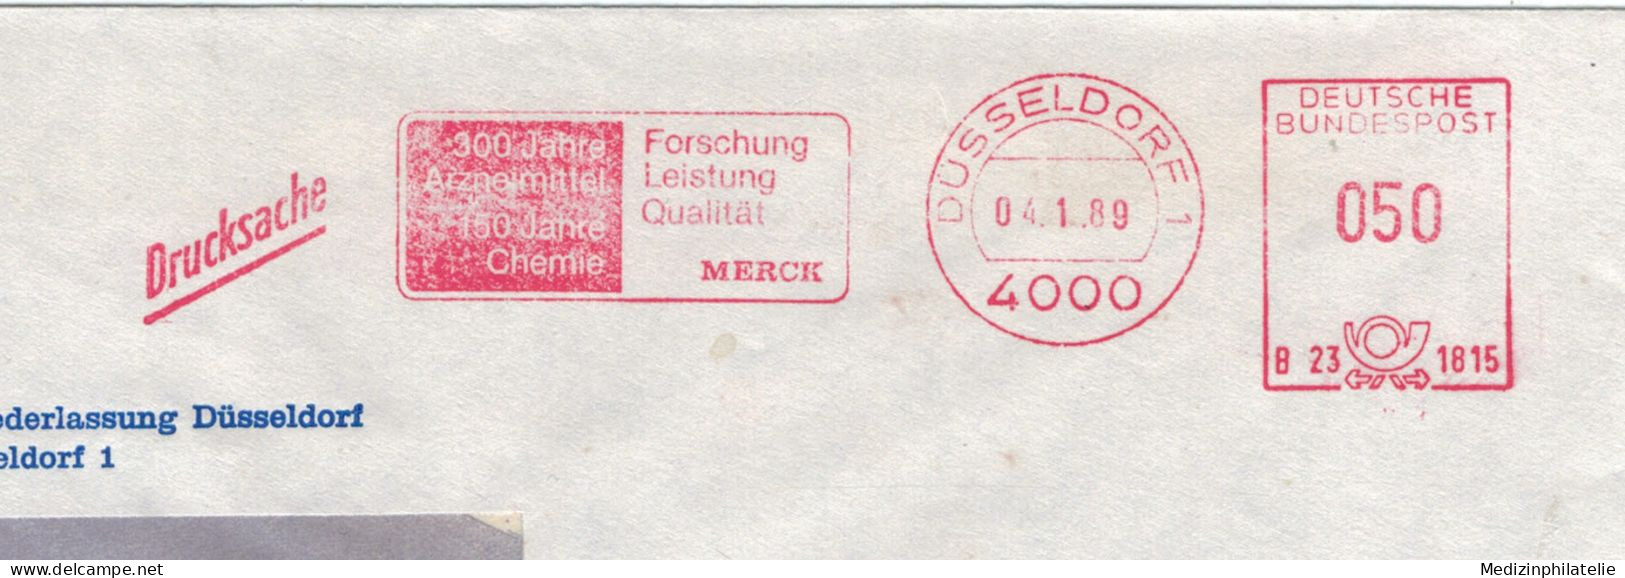 4000 Düsseldorf - Merck Forschung Leistung Qualität - Arzneimittel Chemie 1989 - Pharmacy